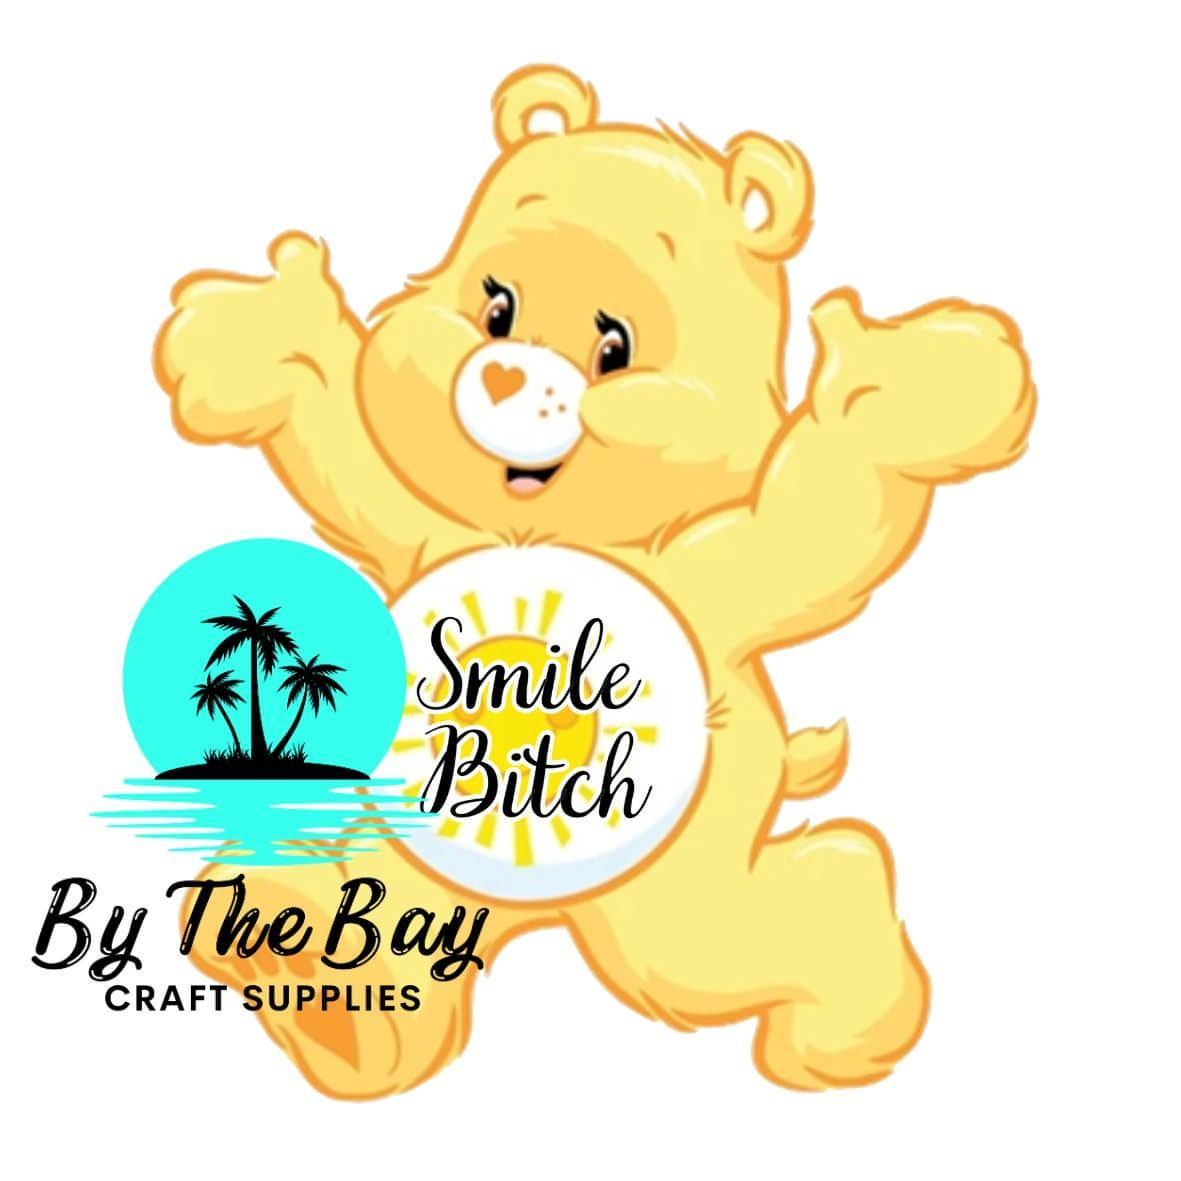 Smile B**ch Bear